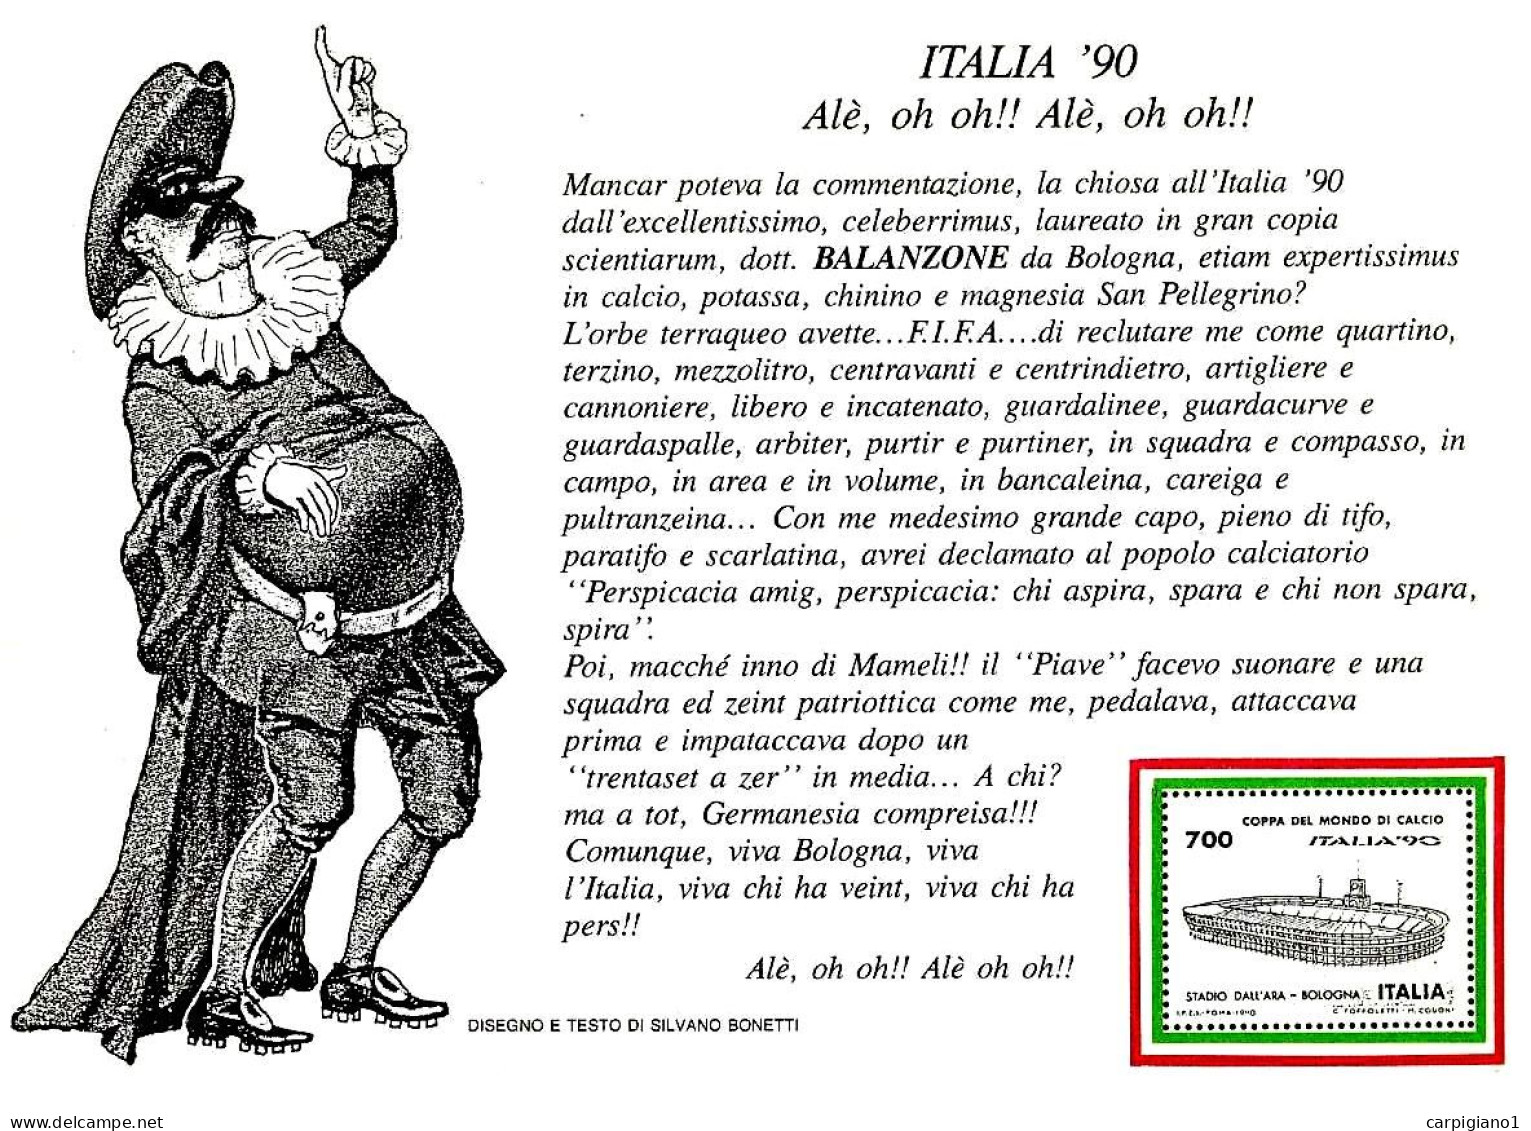 ITALIA ITALY - 1990 BOLOGNA XXXV Bophilex Sigillo S. PETRONIO Su Cartolina AFNB - 7794 - 1981-90: Marcophilie